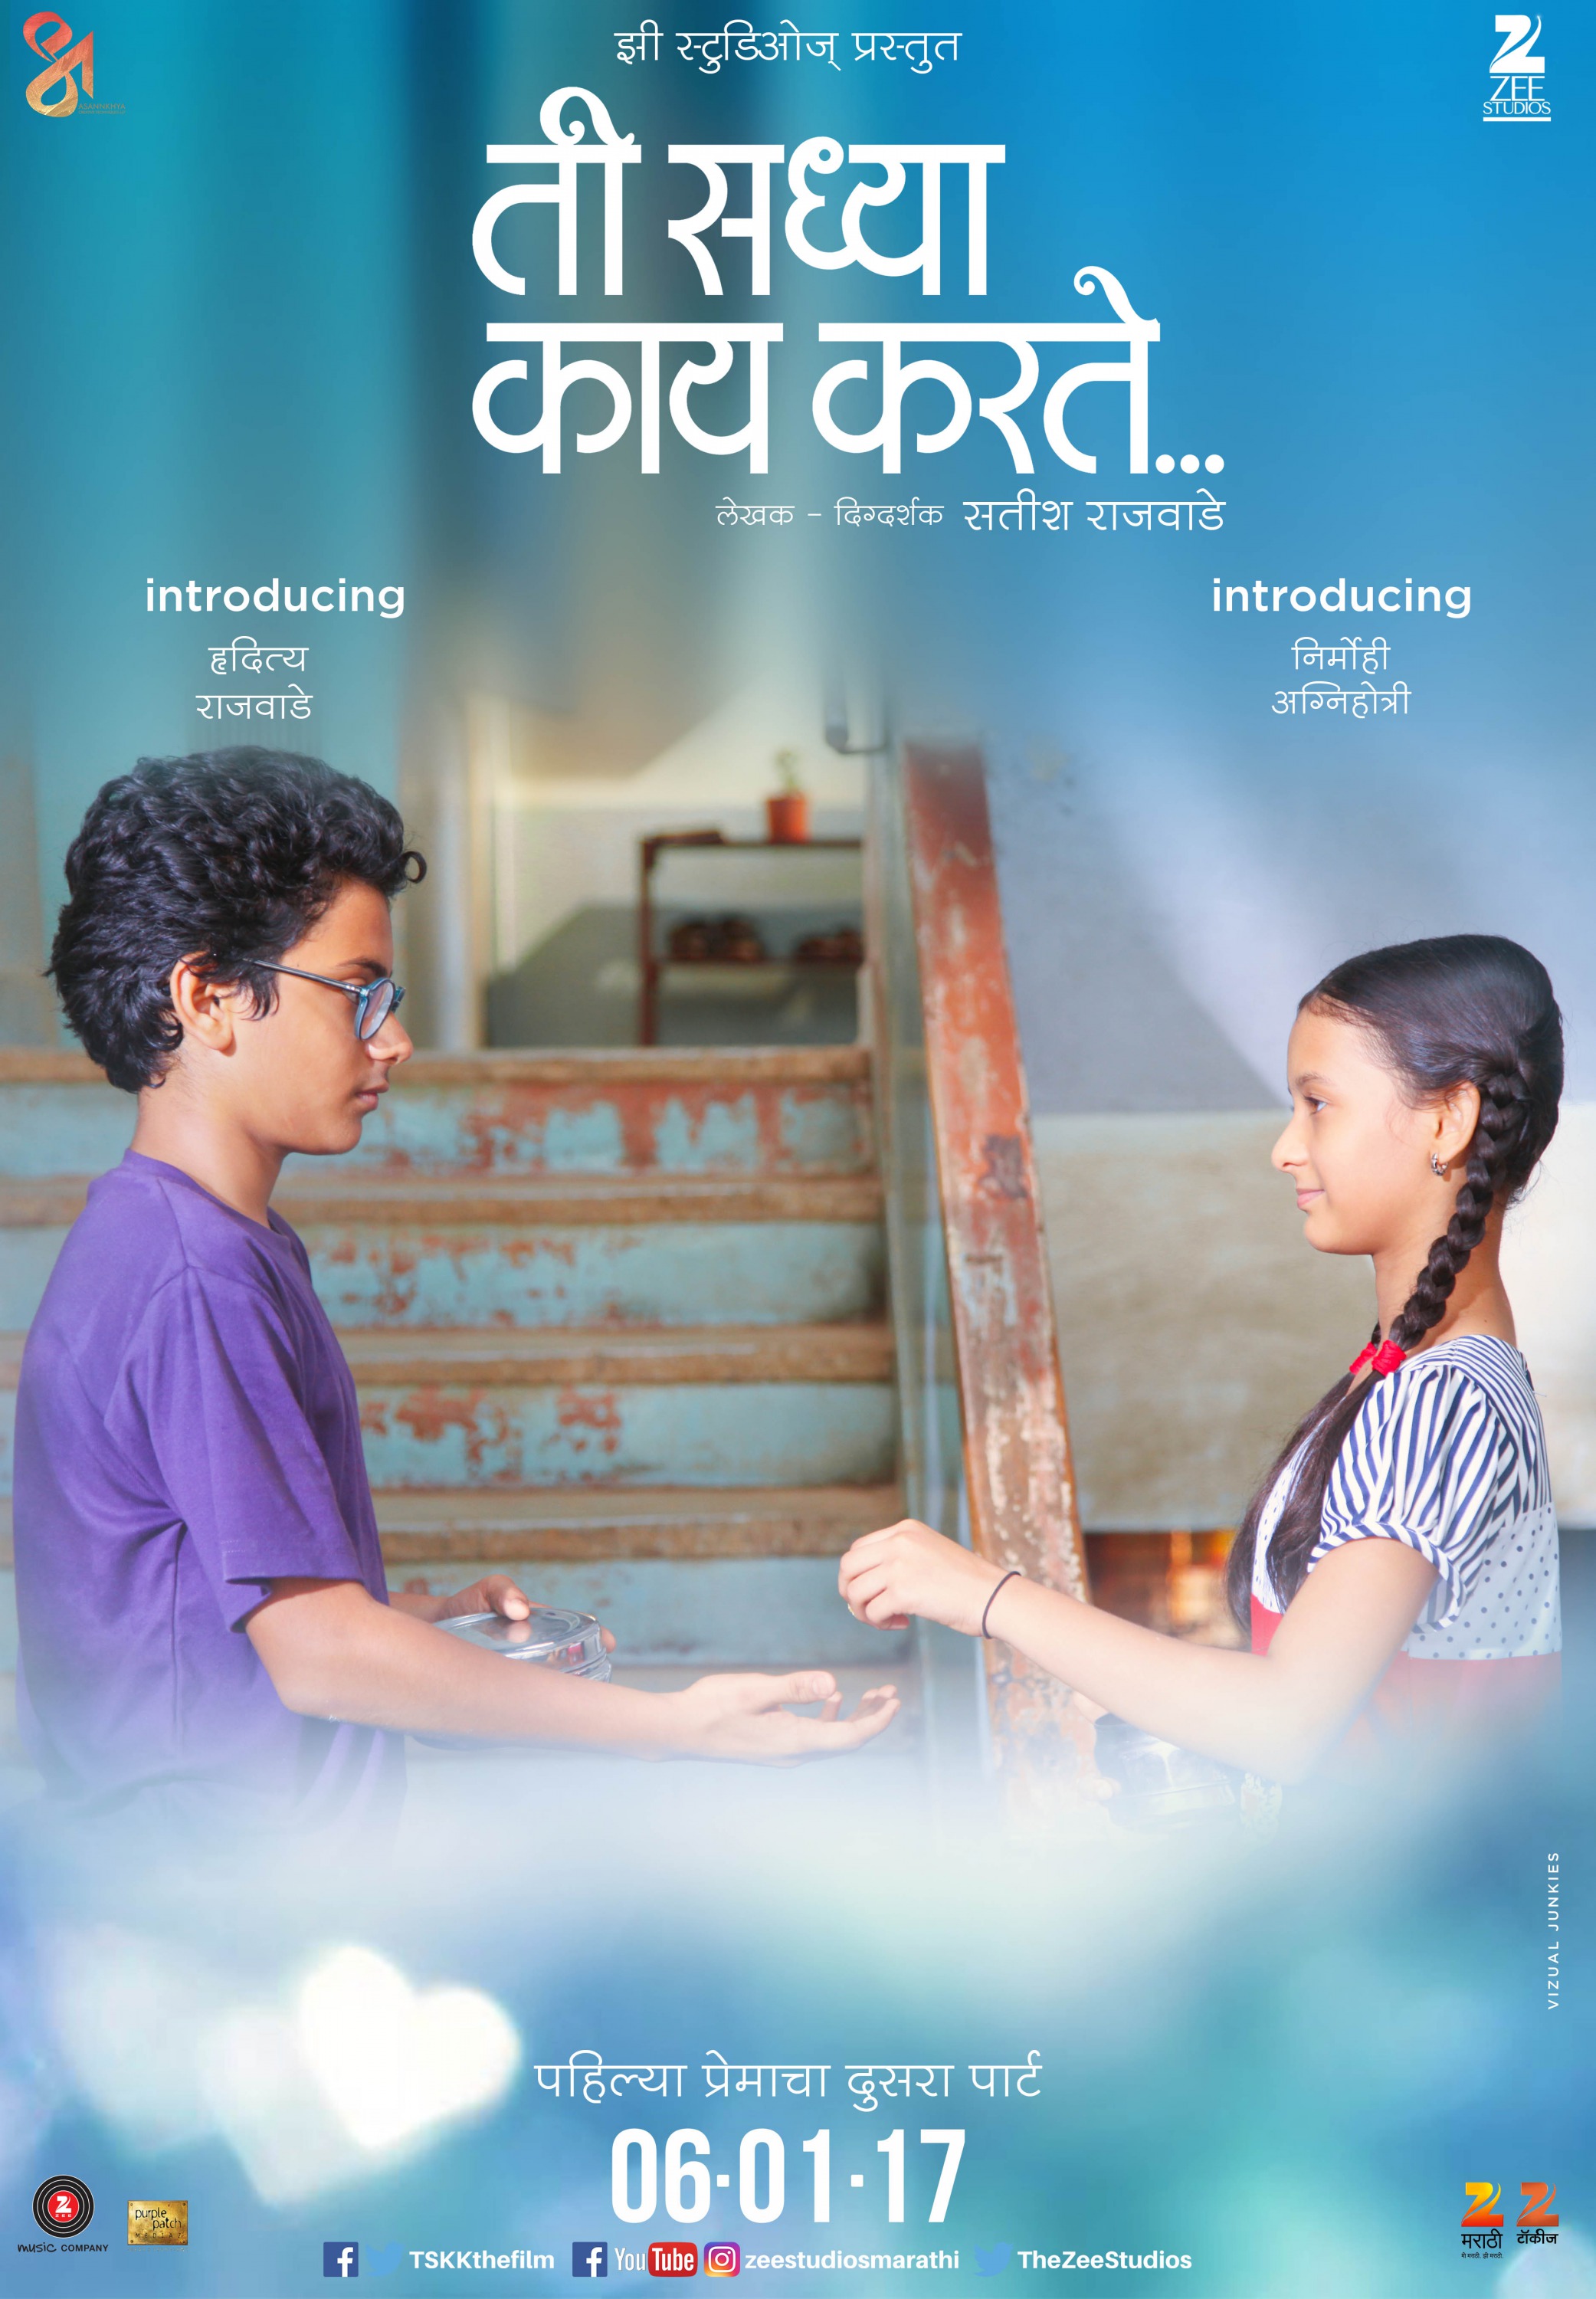 Mega Sized Movie Poster Image for Ti Saddhya Kay Karte (#6 of 10)